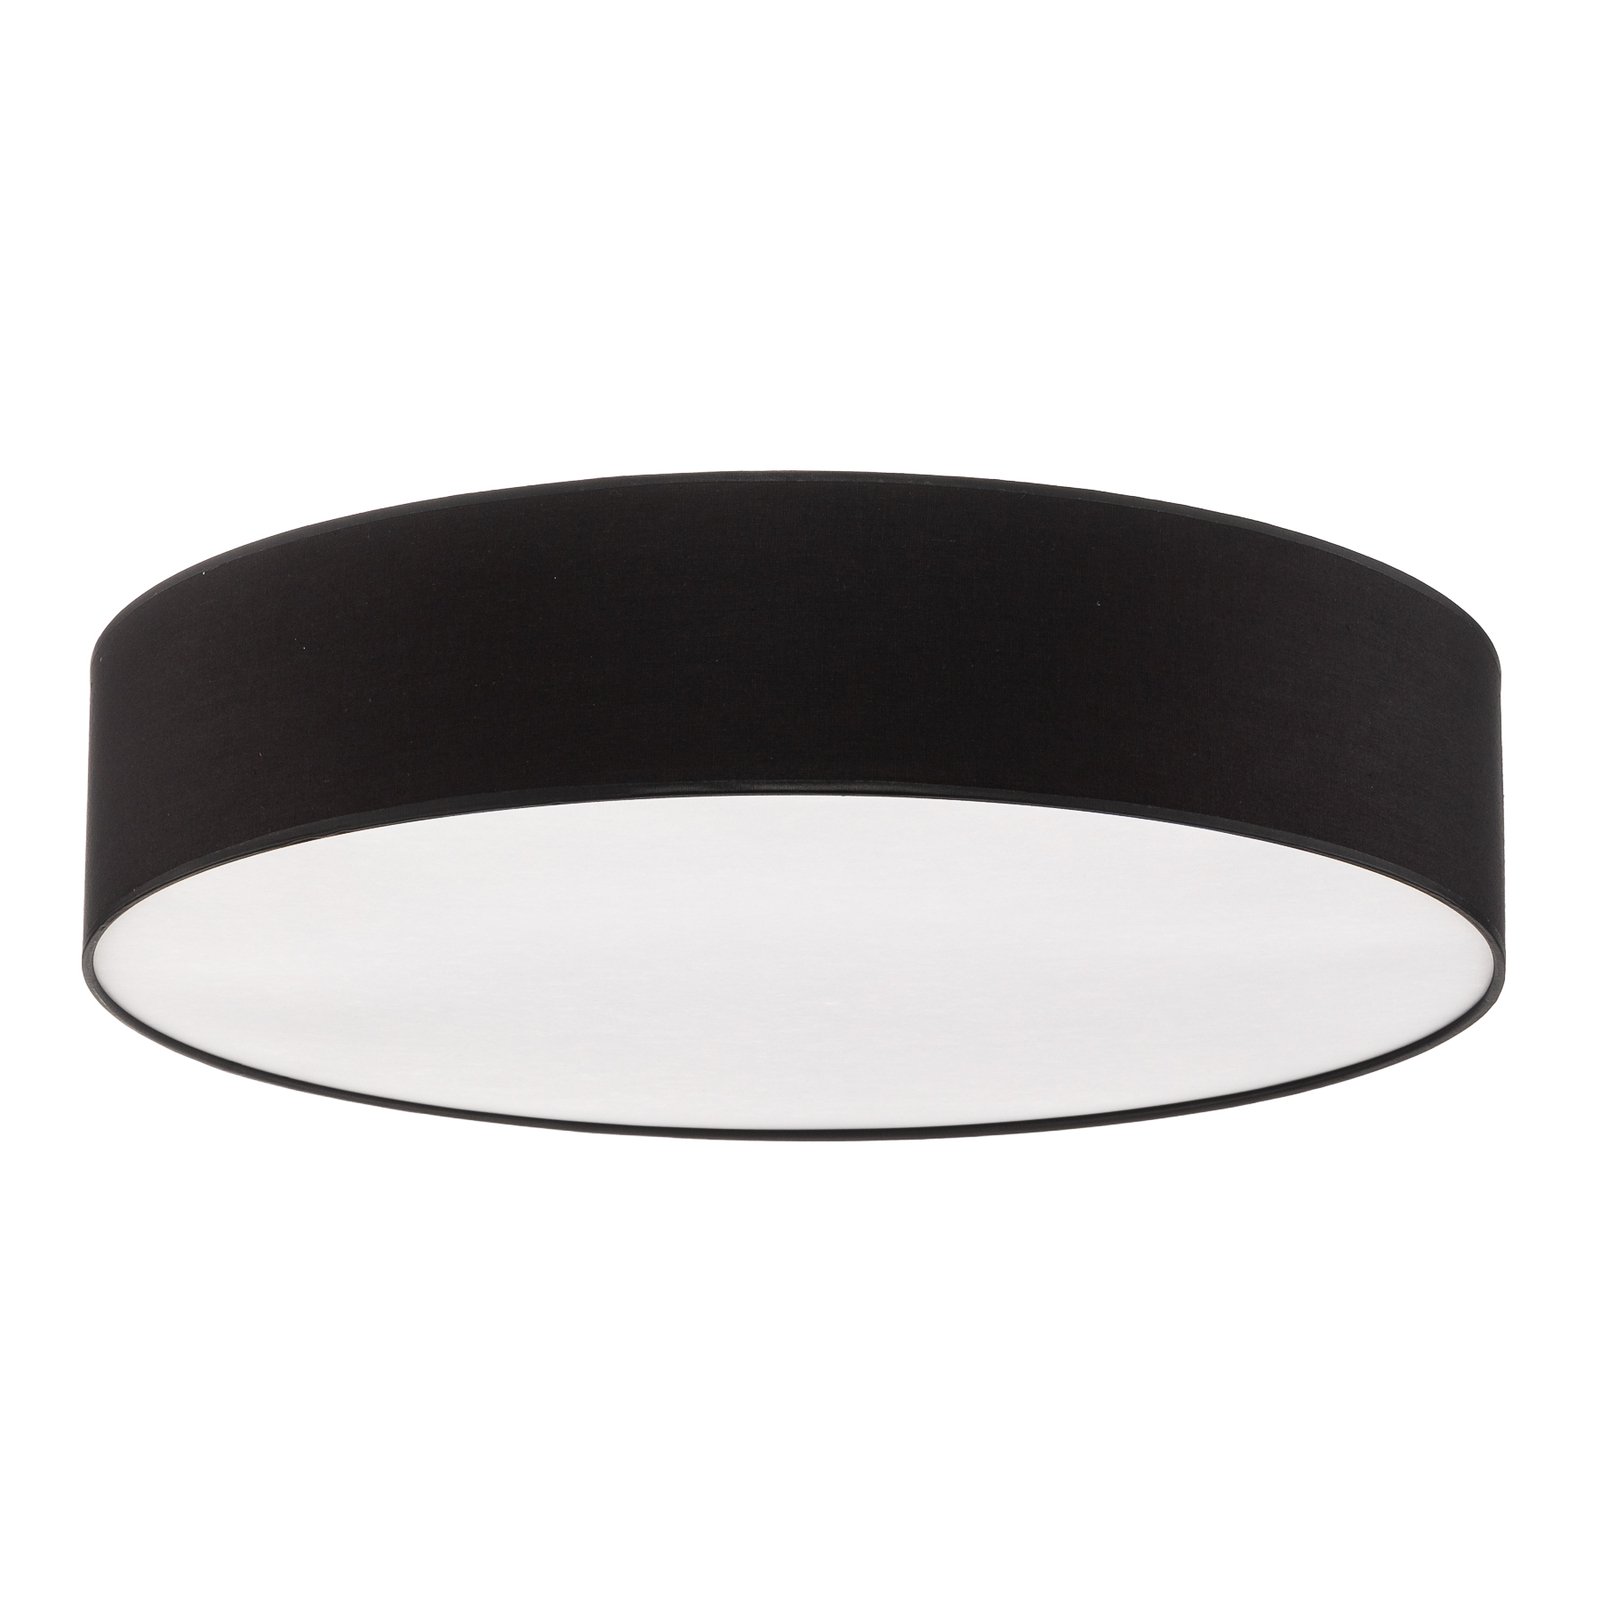 Rondo ceiling light, dark grey Ø 60cm